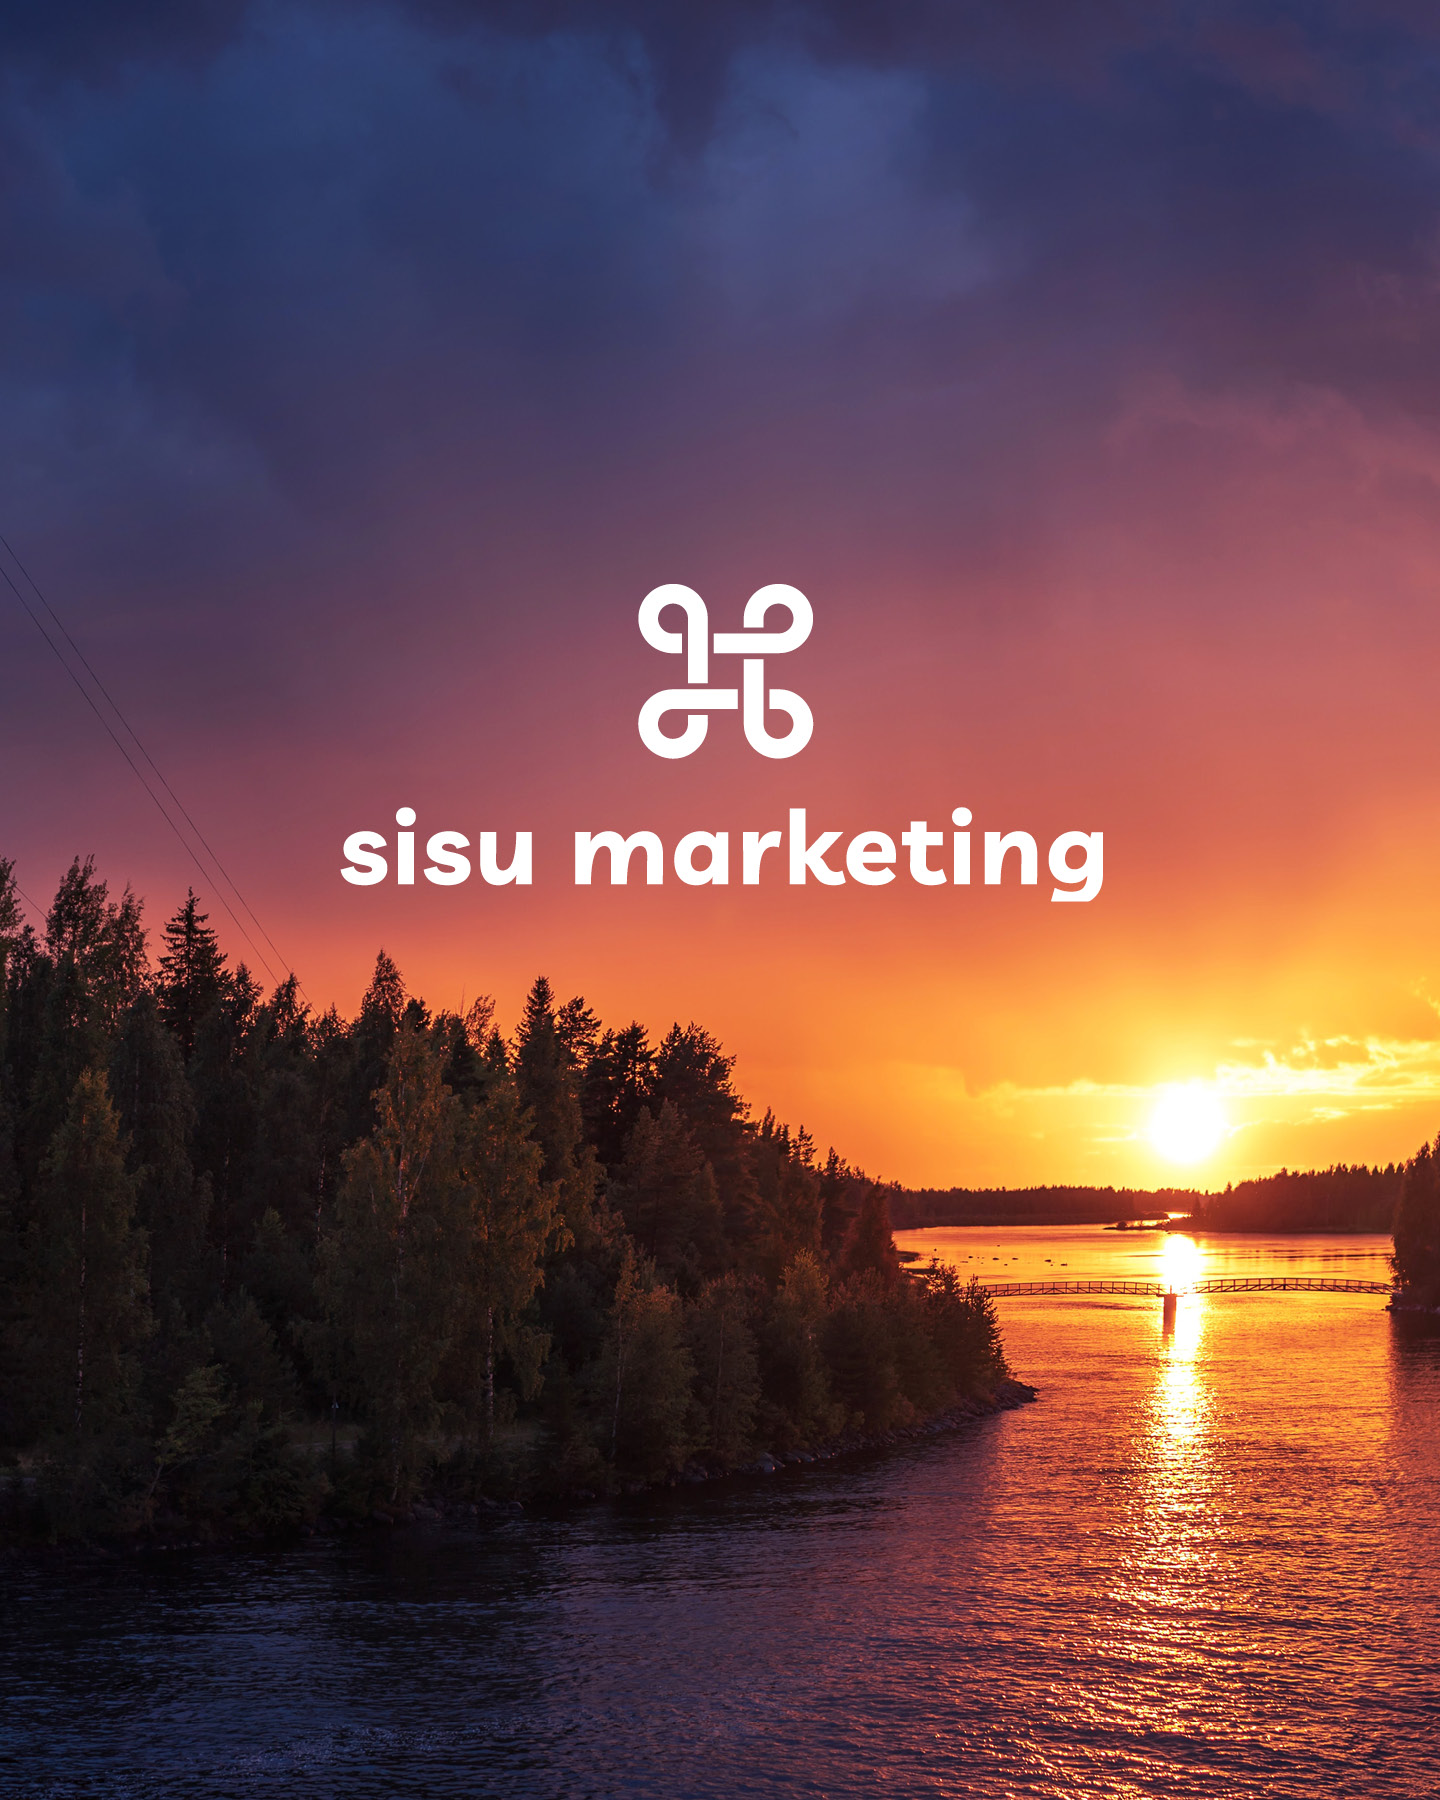 primary logo of sisu marketing - by corliss design